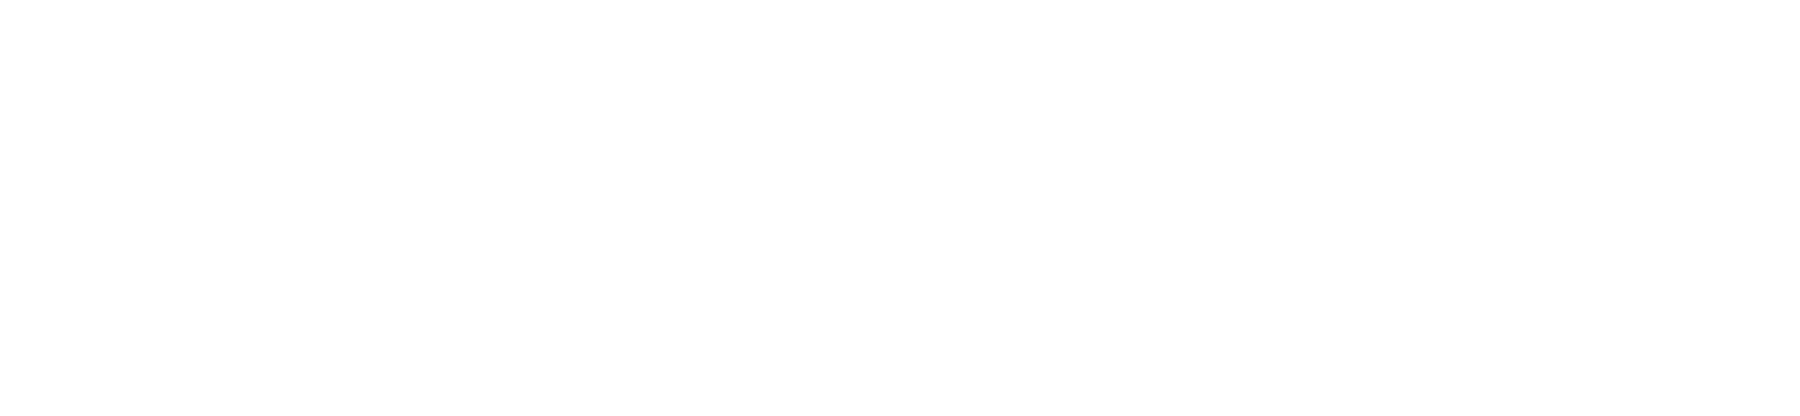 BASF Logo - Basf Logos